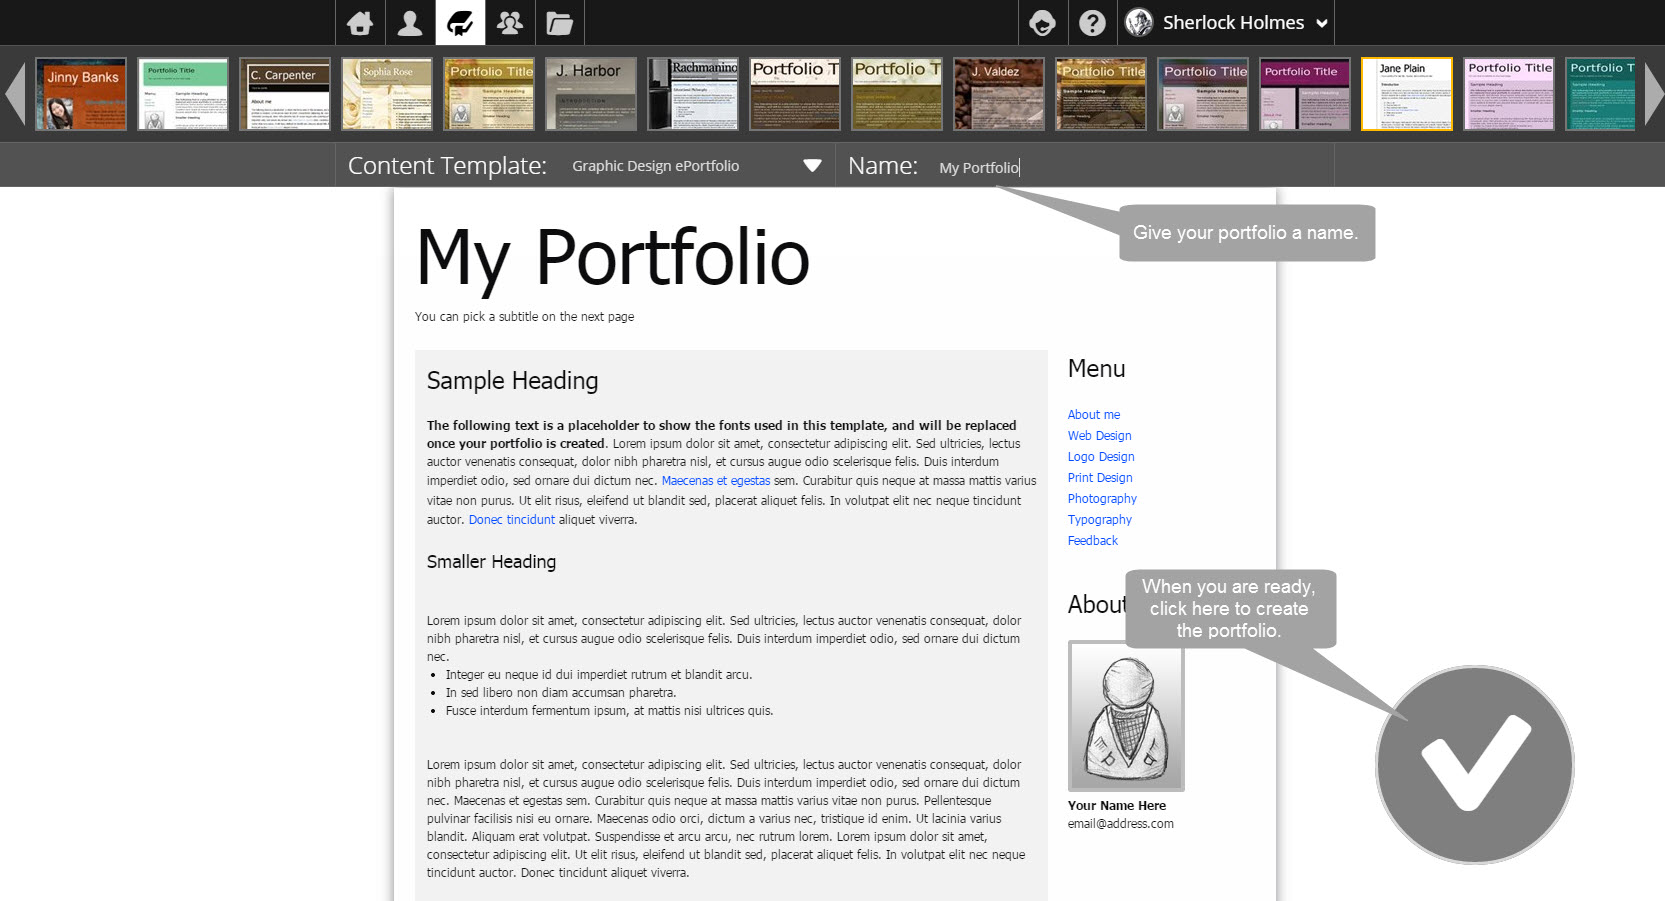 How to Create an Electronic Portfolio - Foliotek Presentation Help